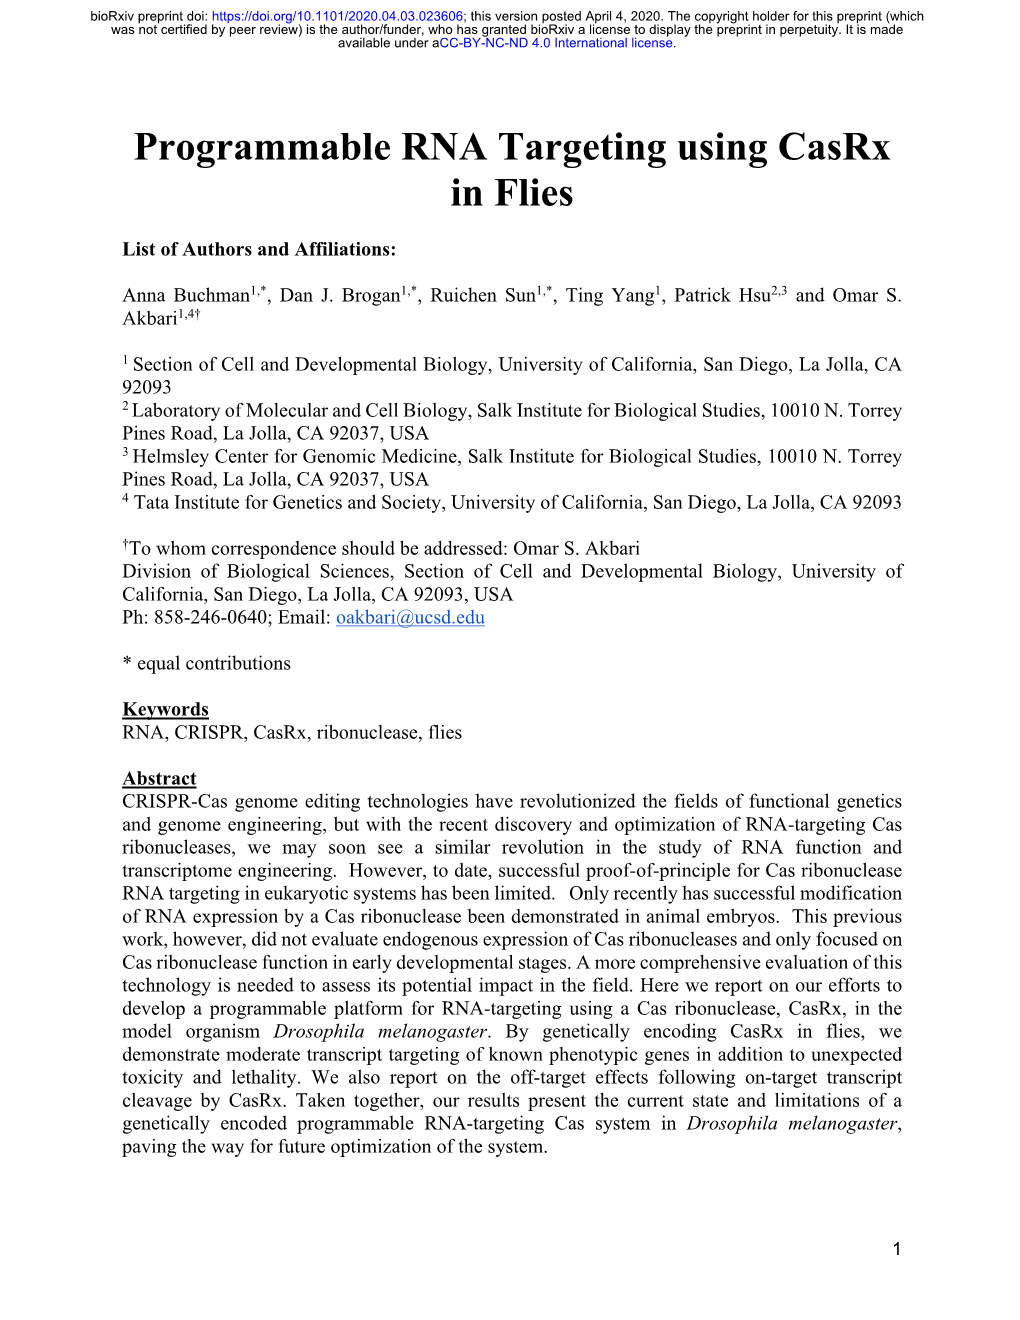 Programmable RNA Targeting Using Casrx in Flies